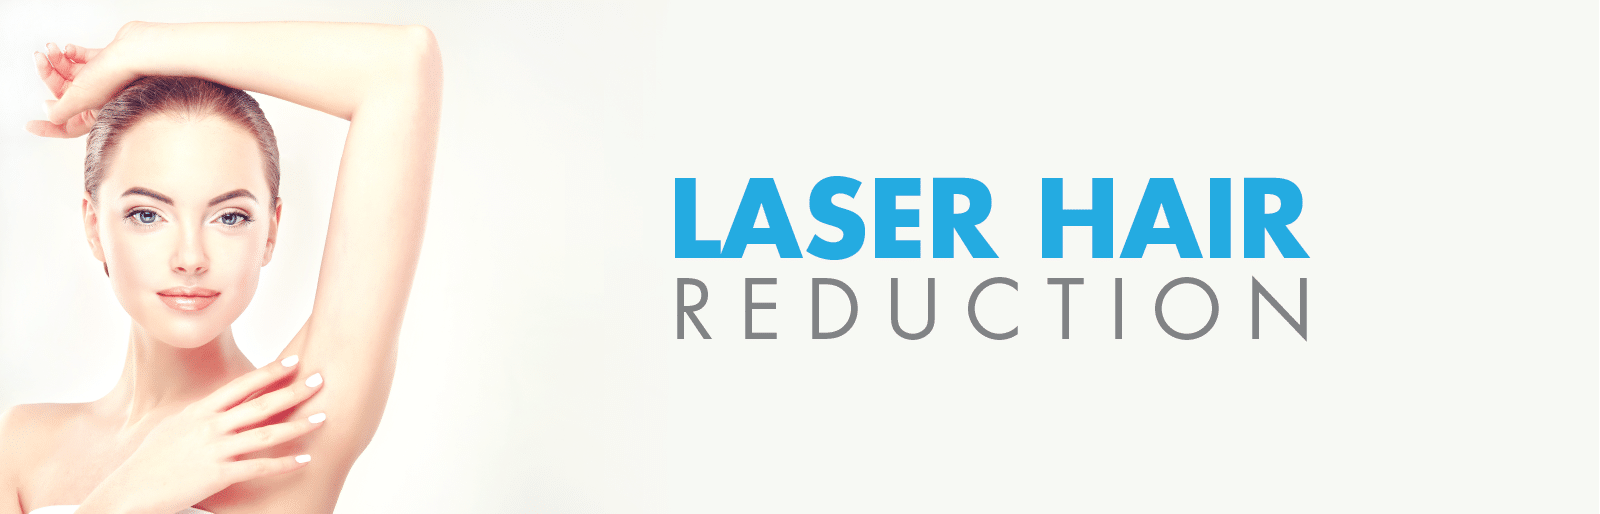 arizona laser hair removal laws arizona laser hair removal ...